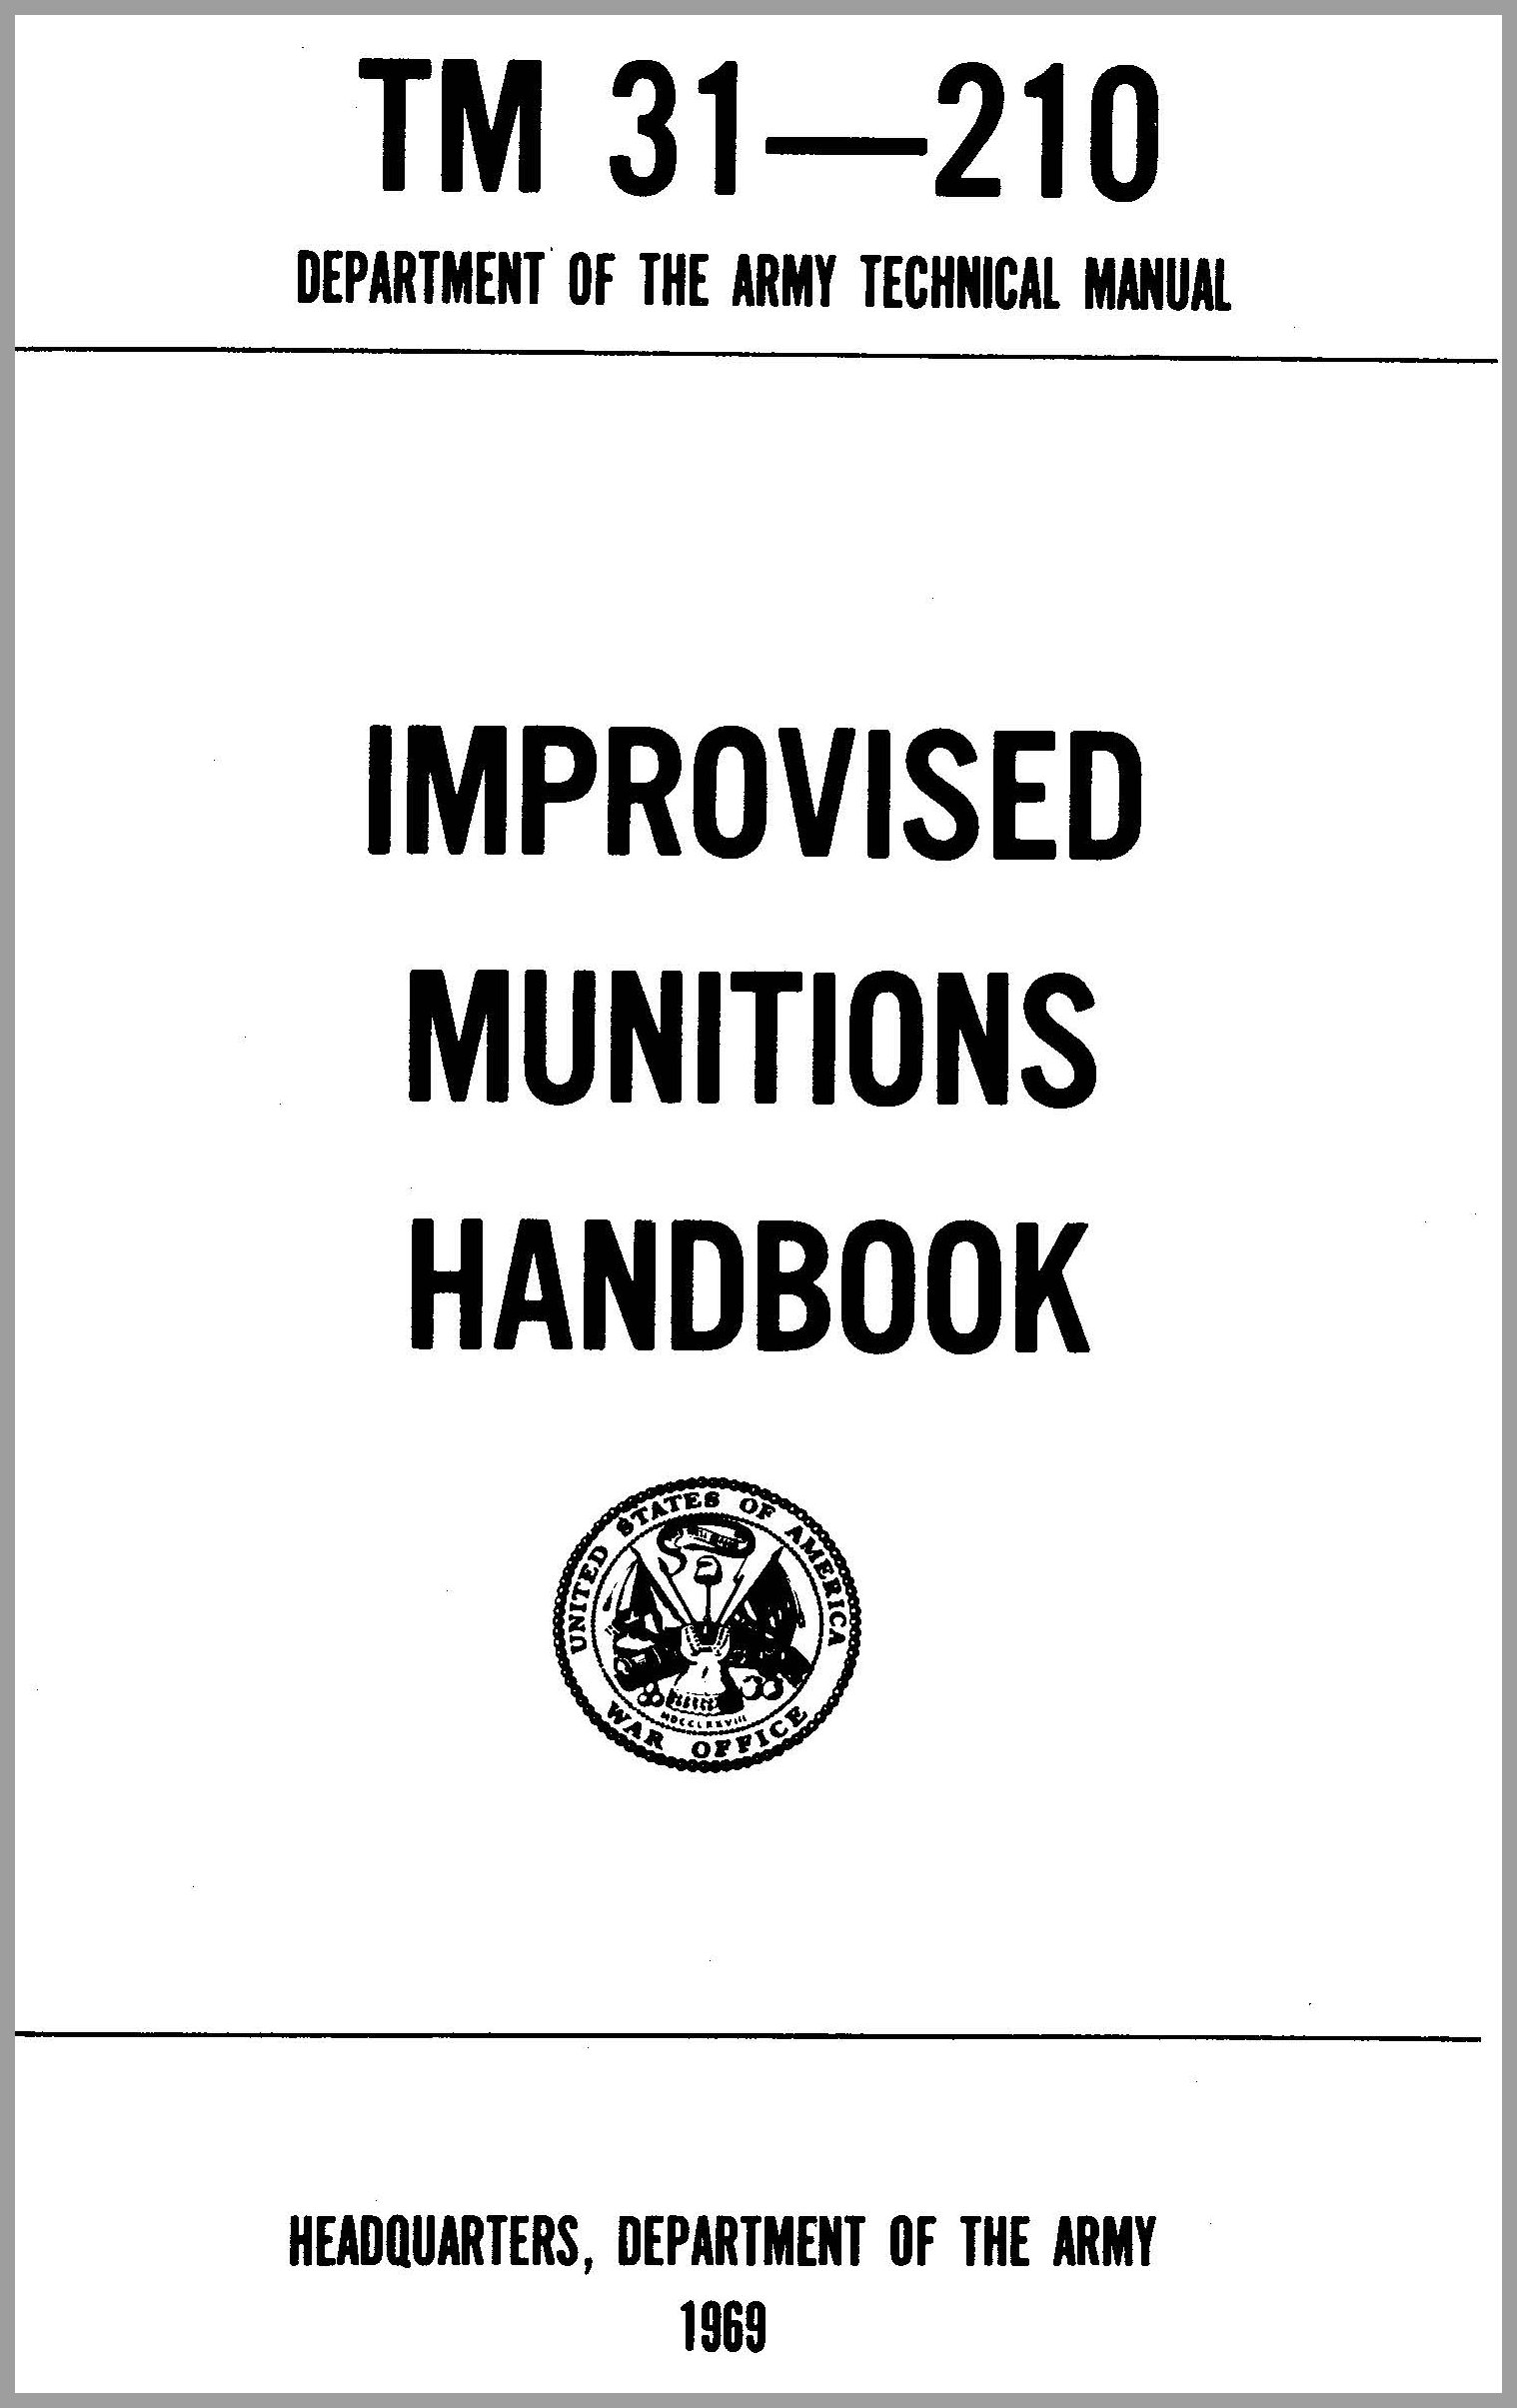 TM 31-210, Improvised Munitions Handbook - 1969 Version - BIG - Click Image to Close